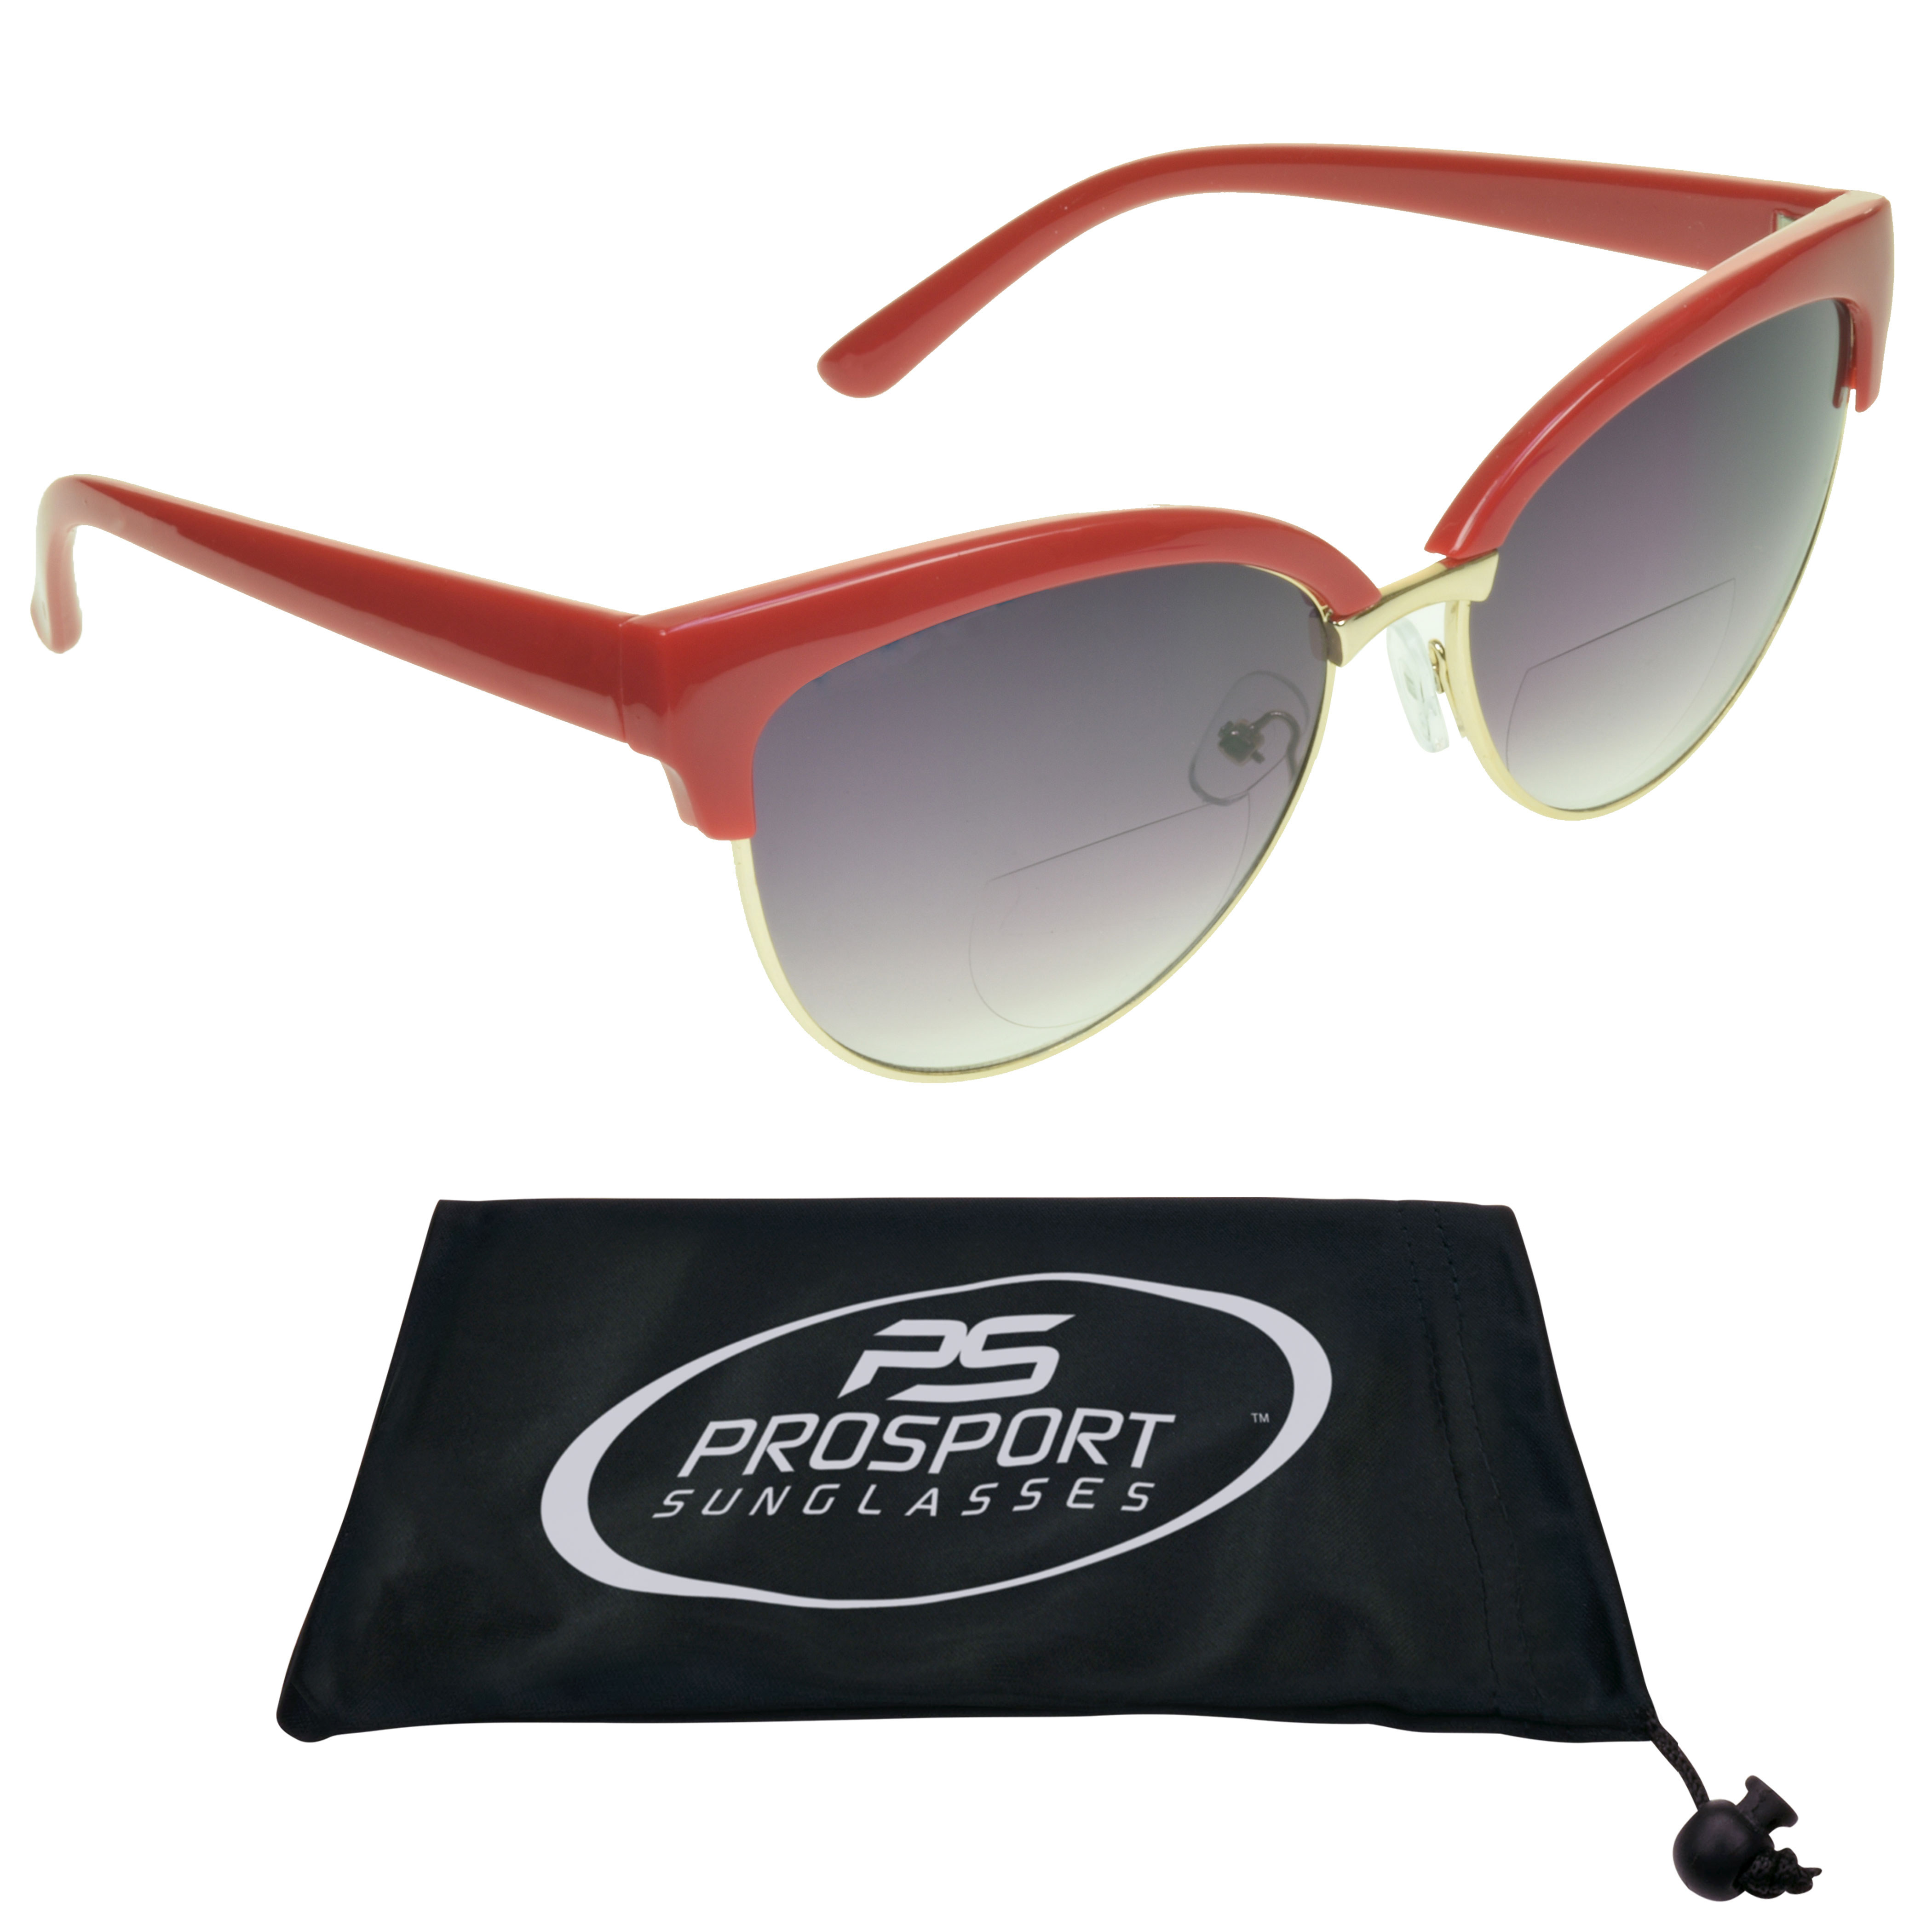 proSPORT Women Bifocal Reading Cateye Fashion Horn Rim Sunglasses Red Gold Frame Smoke Lens +1.00 - image 1 of 5